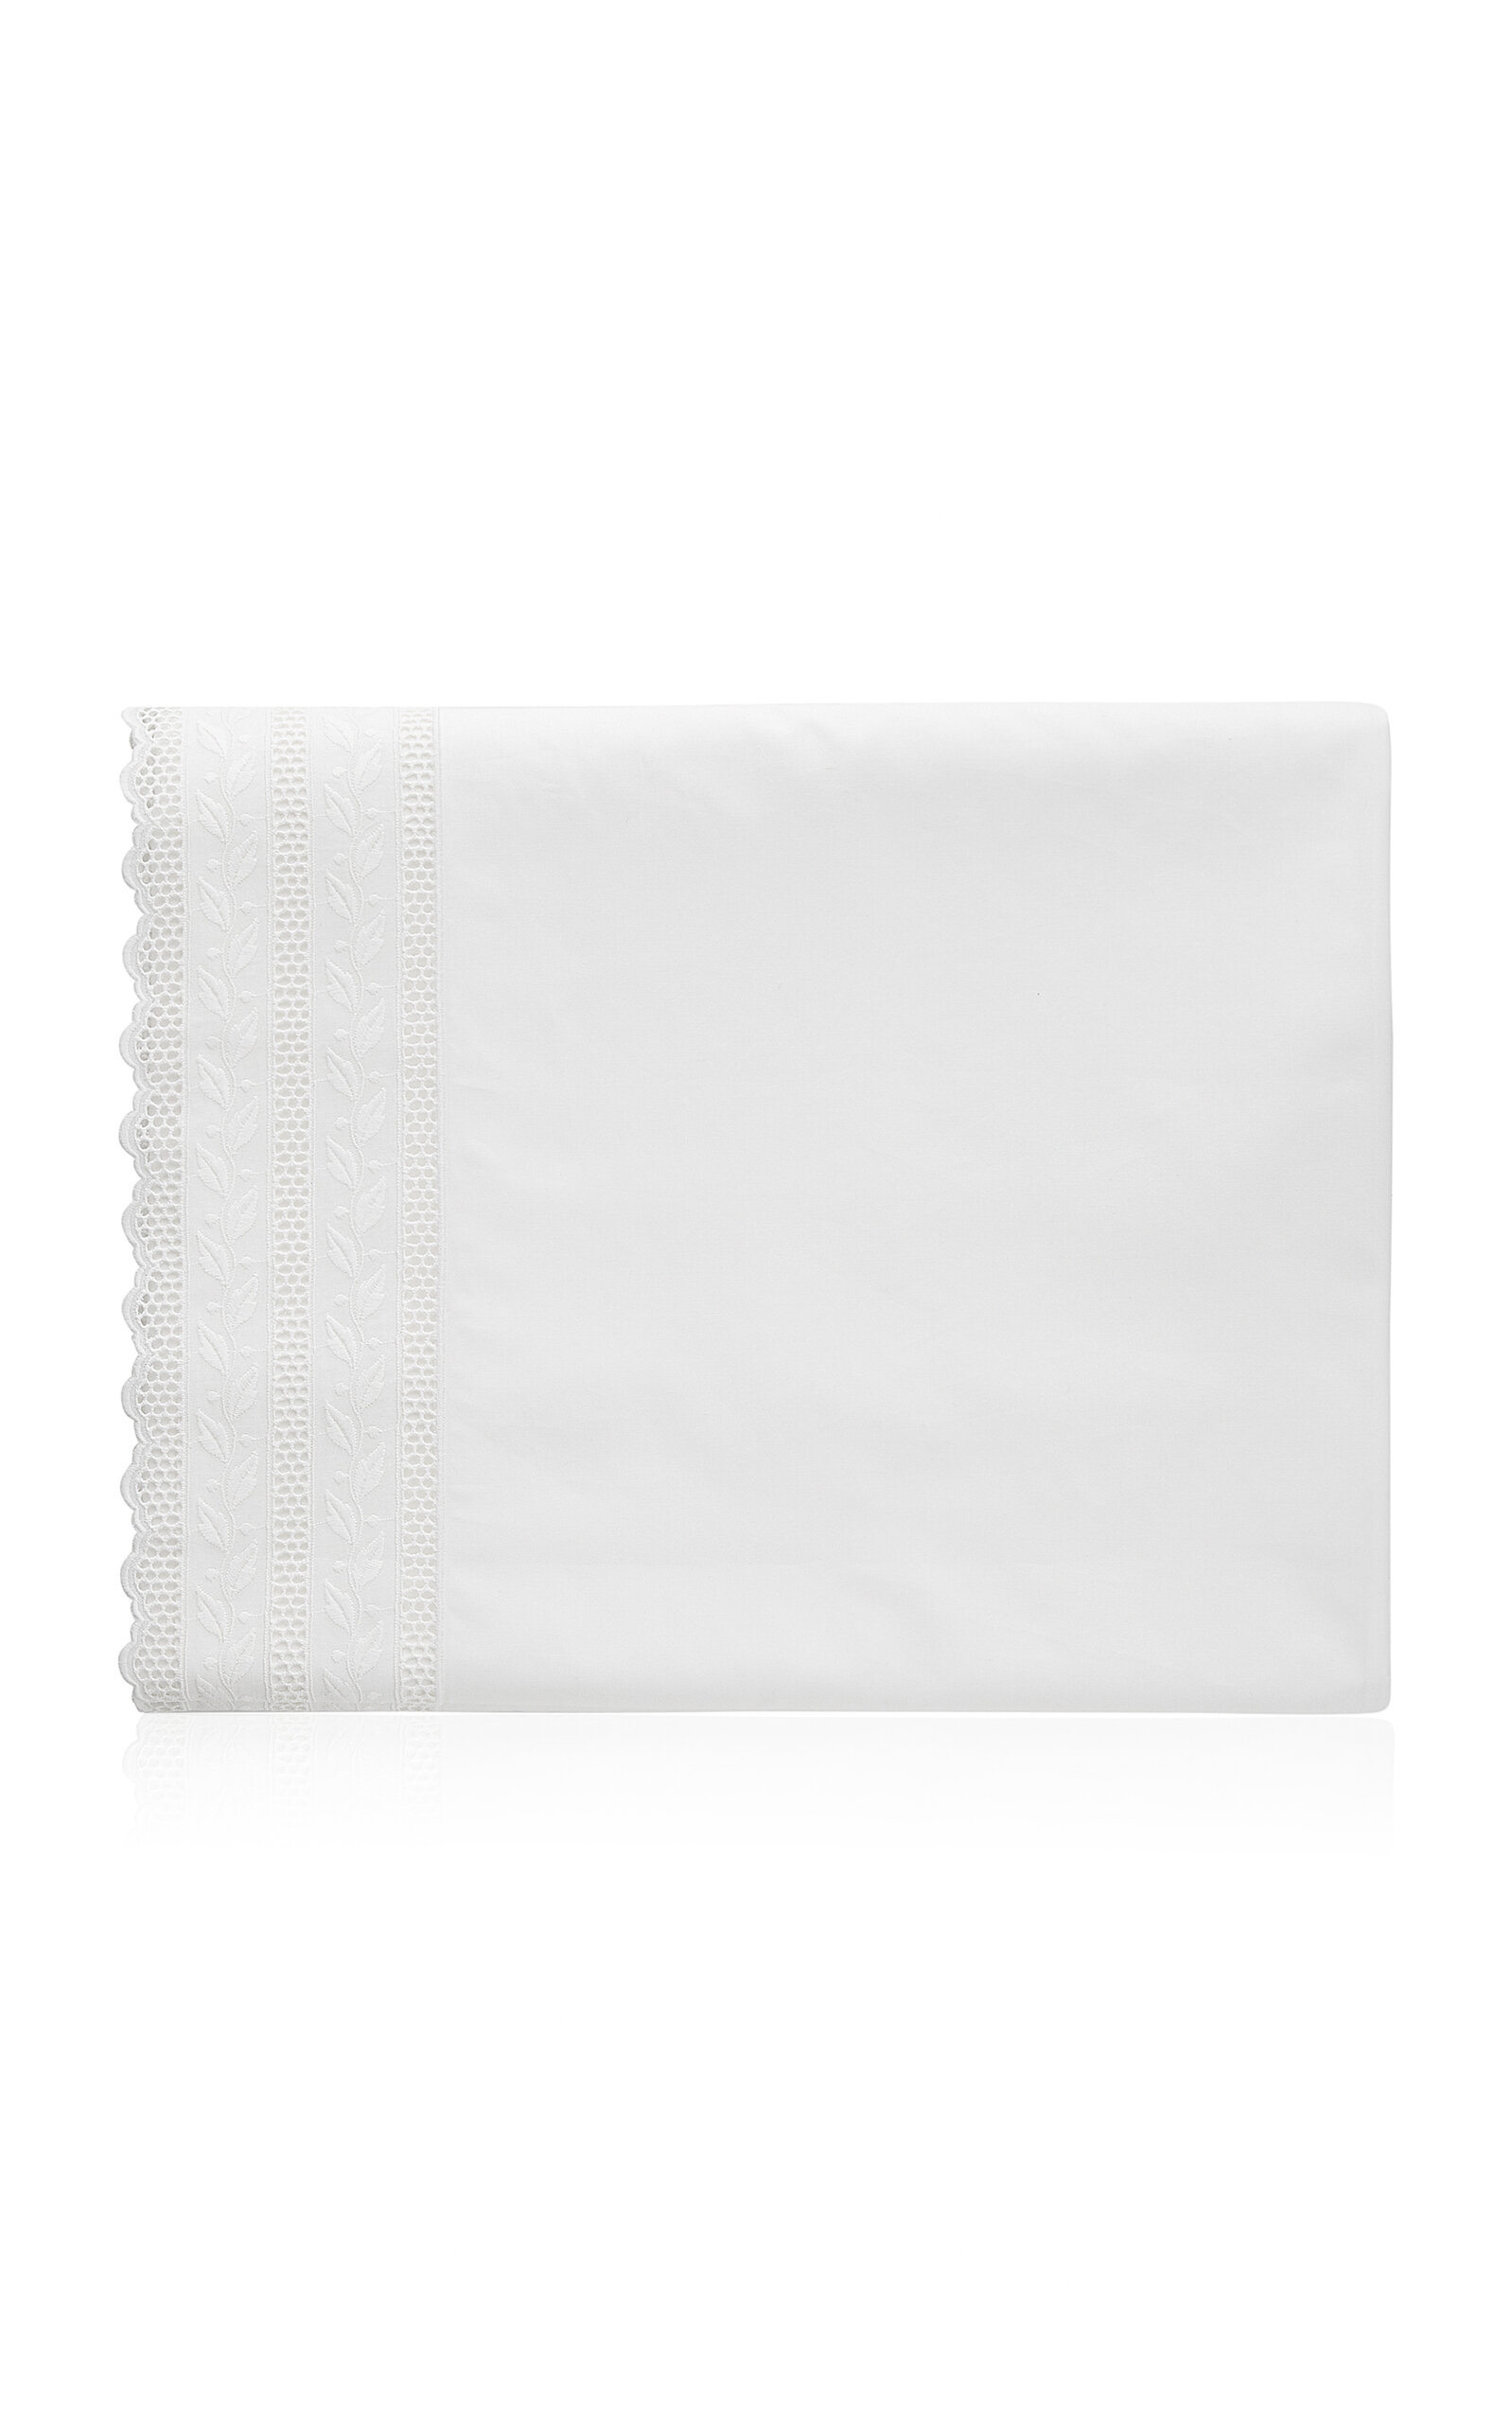 Los Encajeros Hojas Percale Percale Queen Top Sheet In White